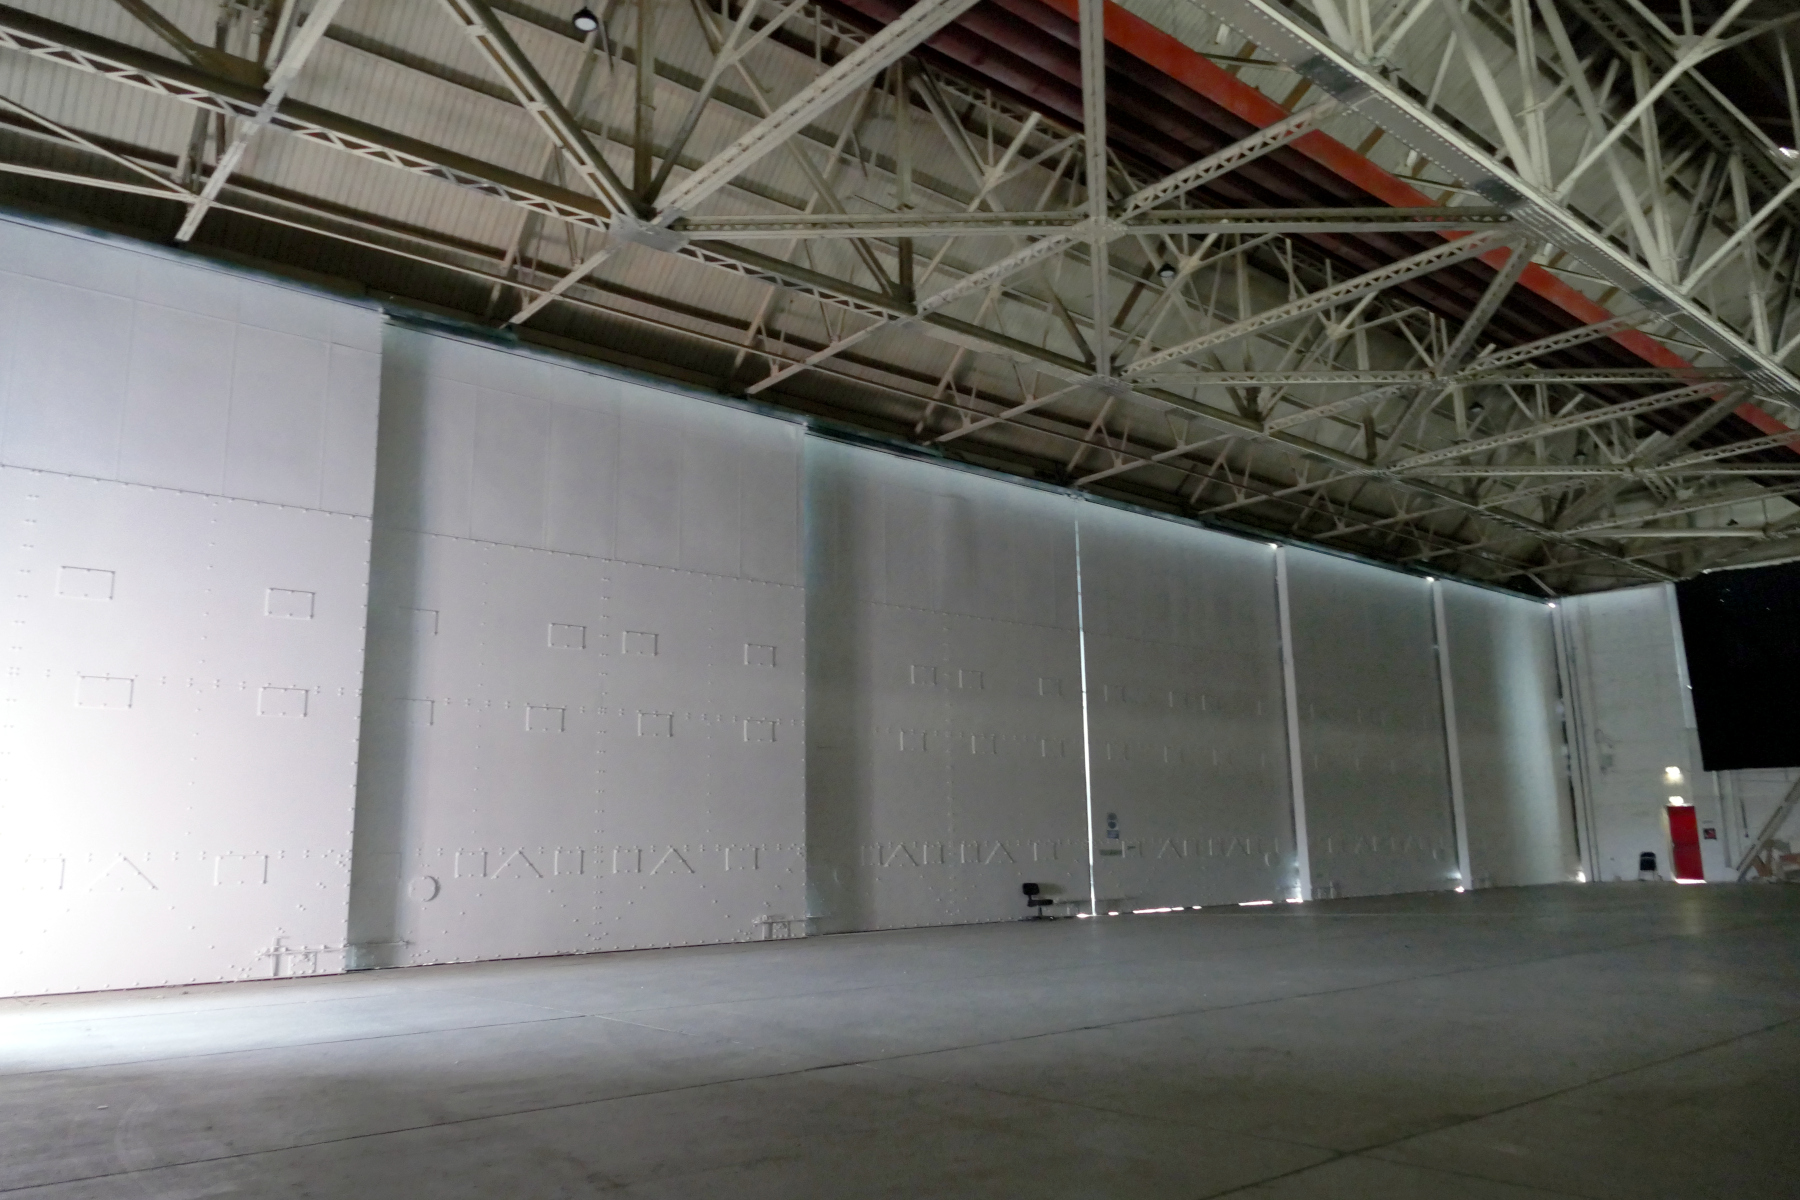 Interior of original RAF aircraft hangar with very large white metal door backdrop